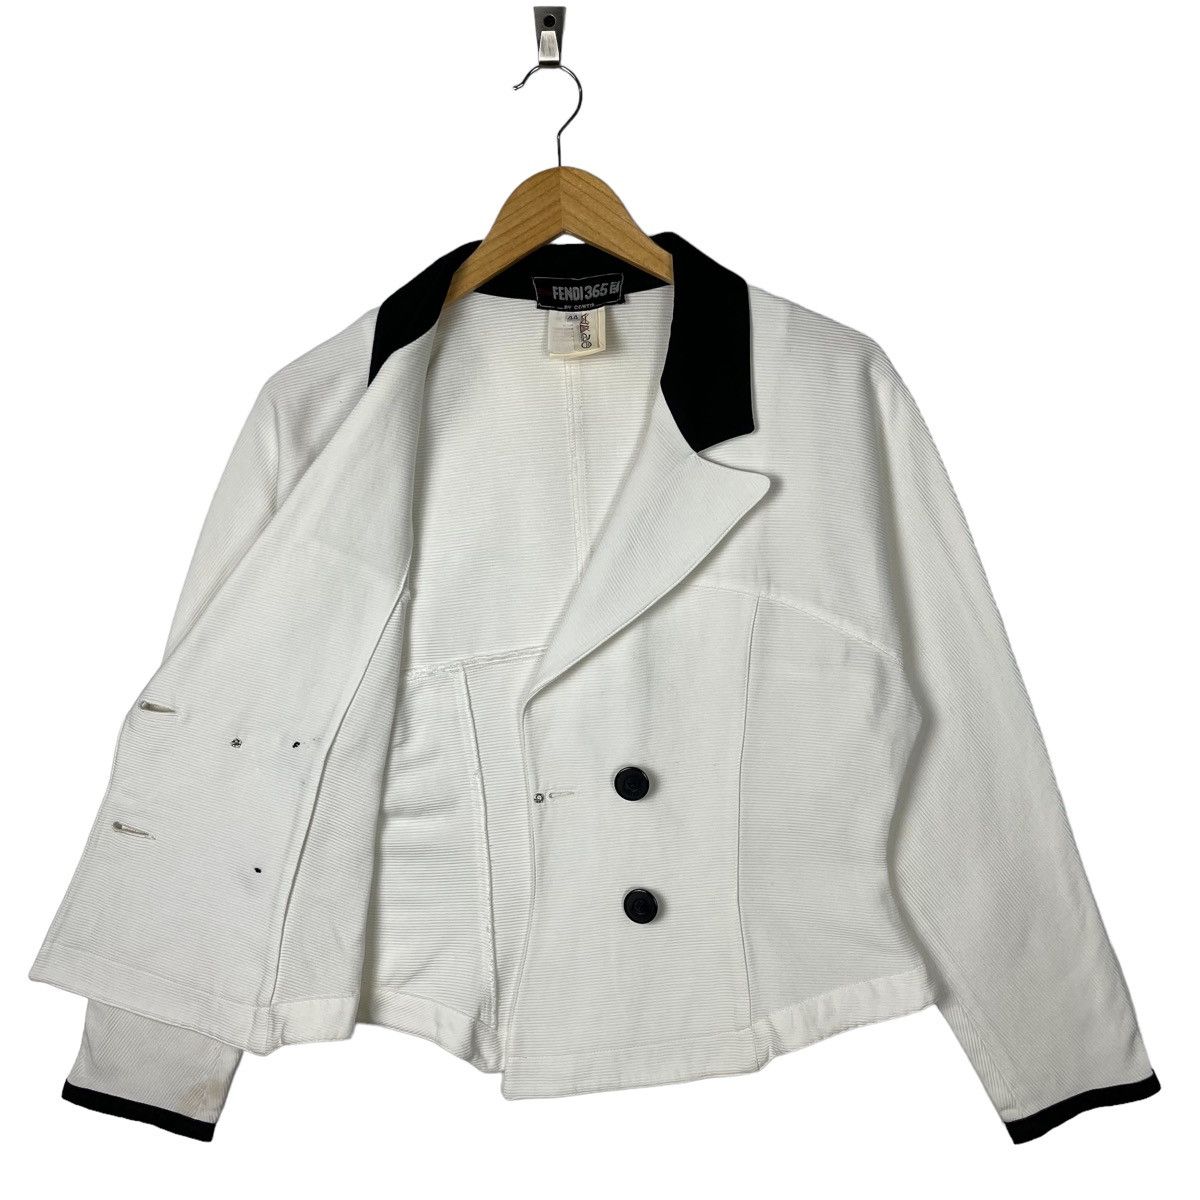 Vintage Vintage Fendi Roma 365 Blazer Jacket Size M / US 6-8 / IT 42-44 - 4 Thumbnail